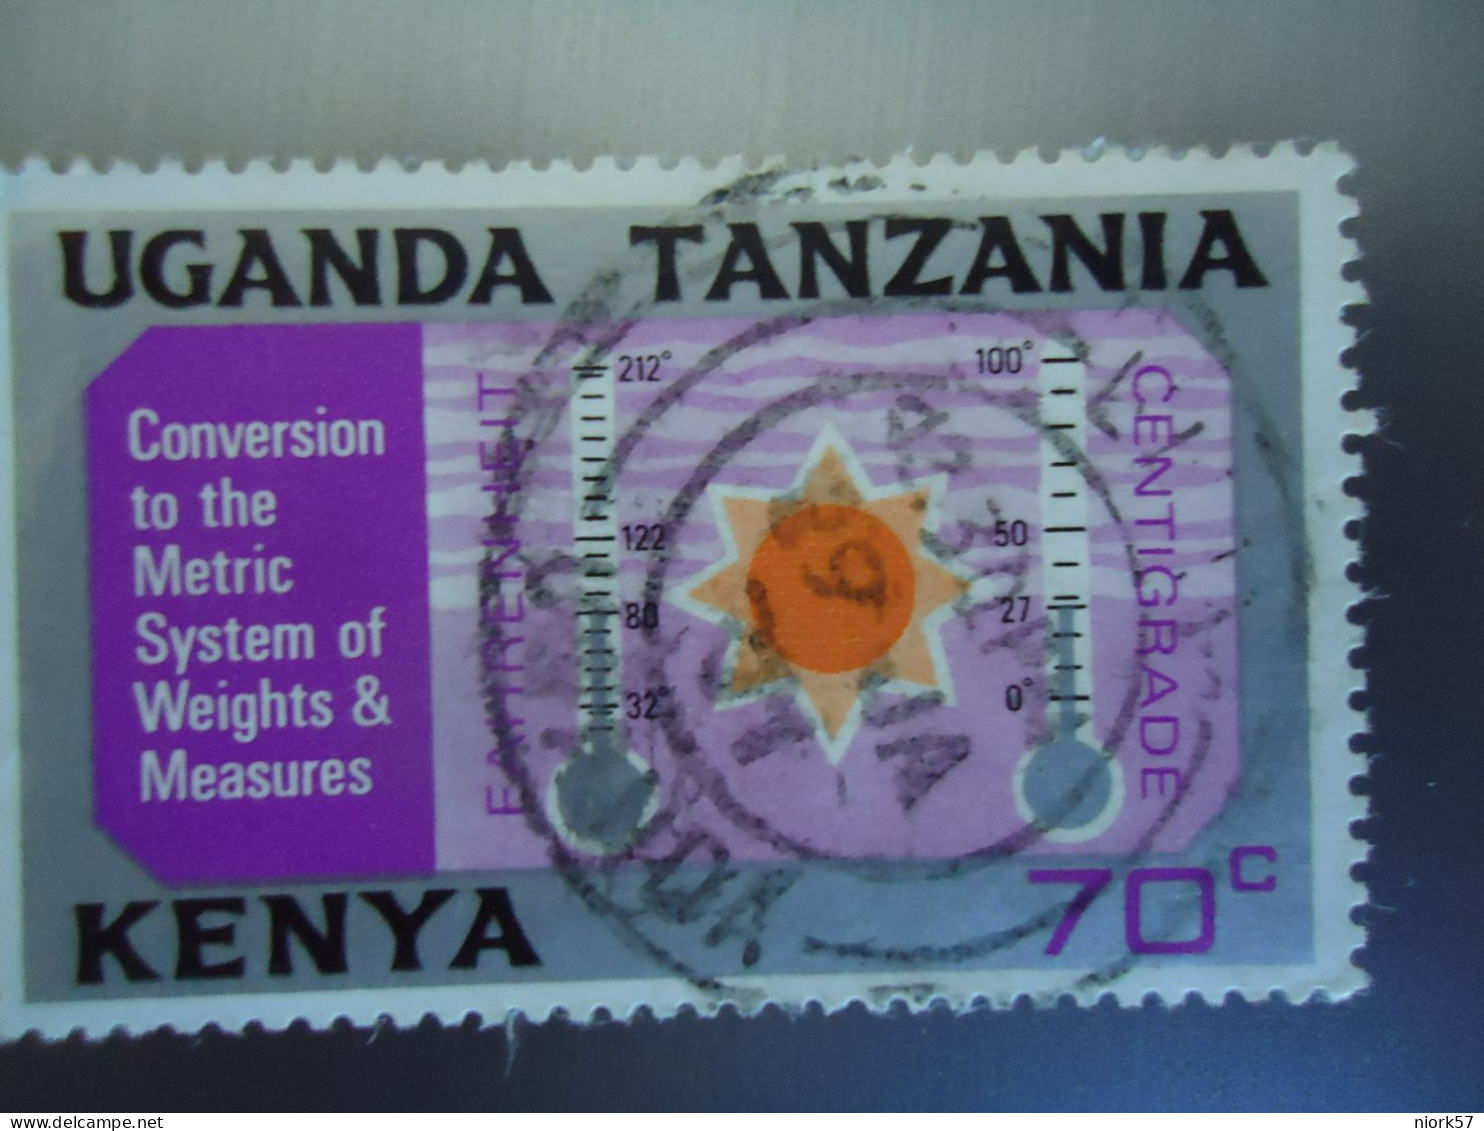 KENYA UGANDA  TANZANIA USED  STAMPS  ANNIVERSARIES   WITH POSTMARK - Kenya, Ouganda & Tanzanie